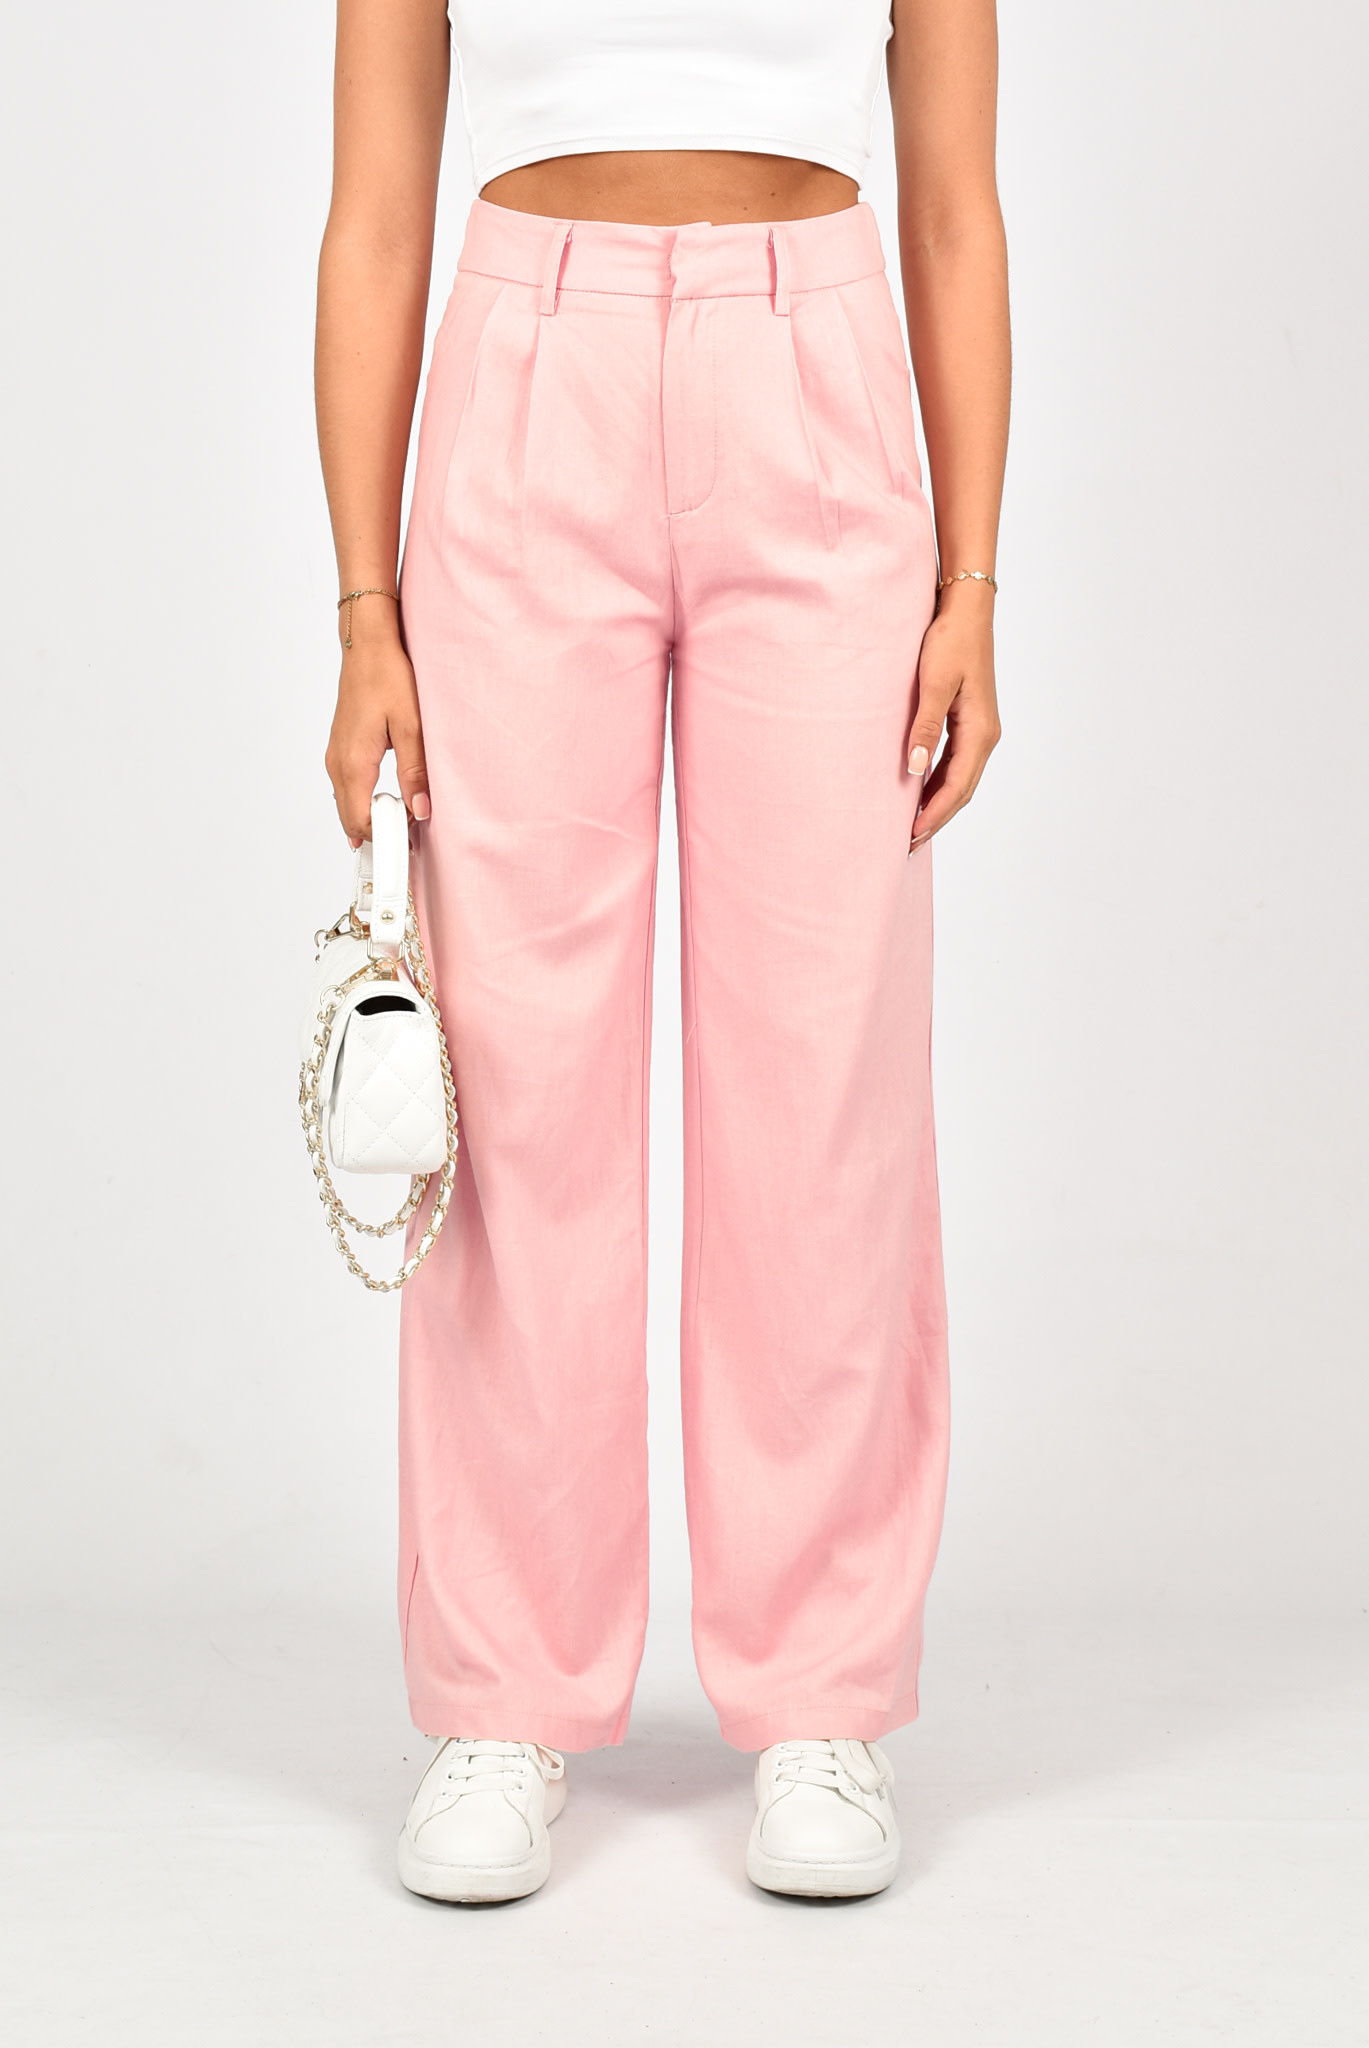 Laurien pantalon light pink